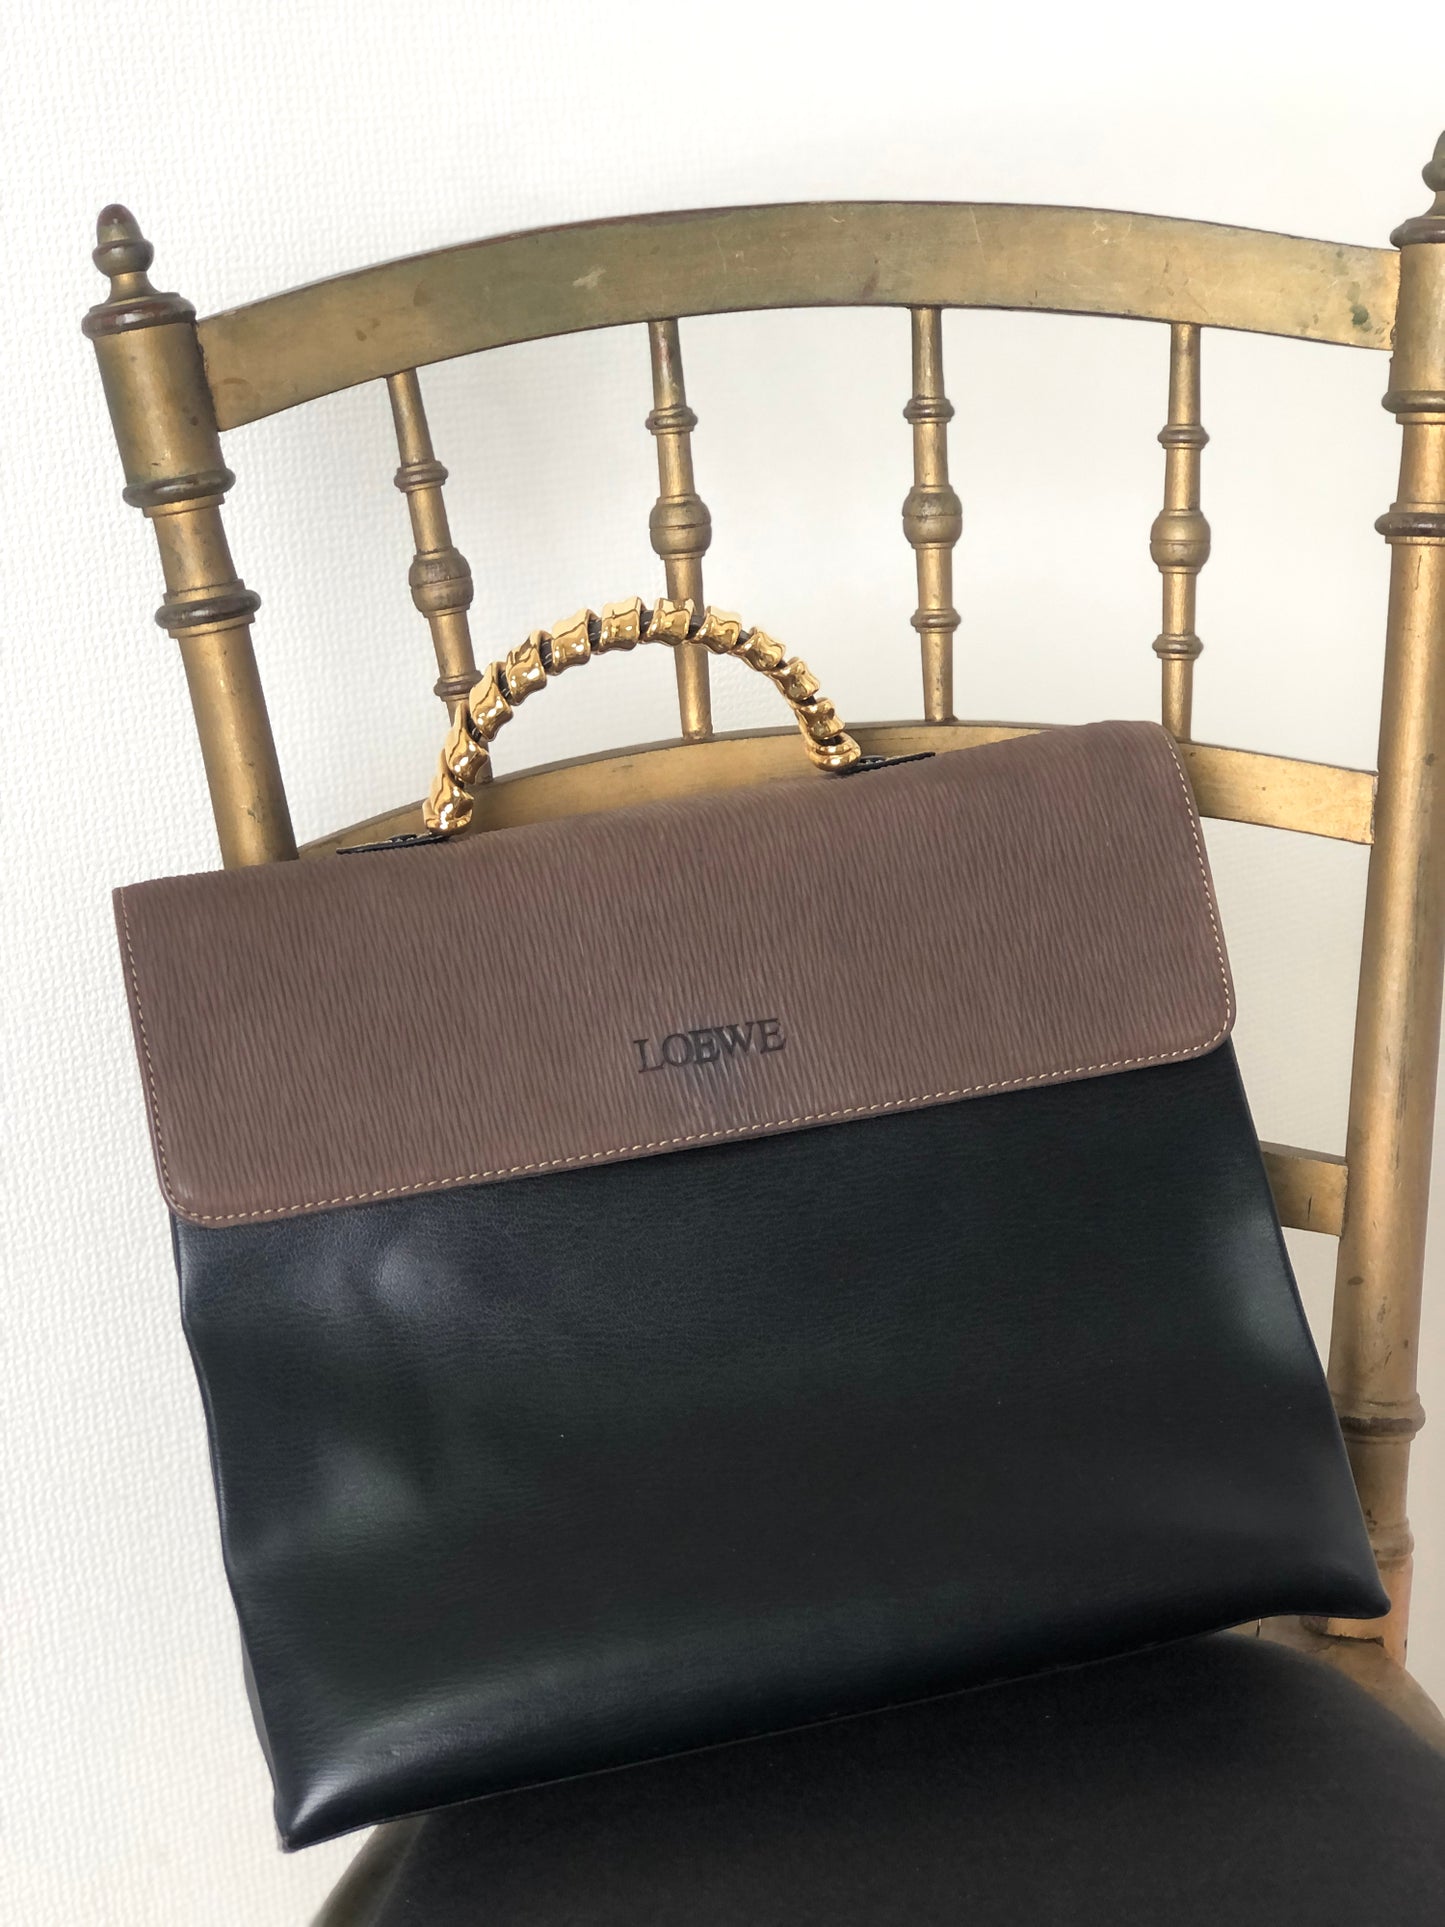 LOEWE Velazquez Metal Leather Handle Handbag Black Vintage   jyxx34